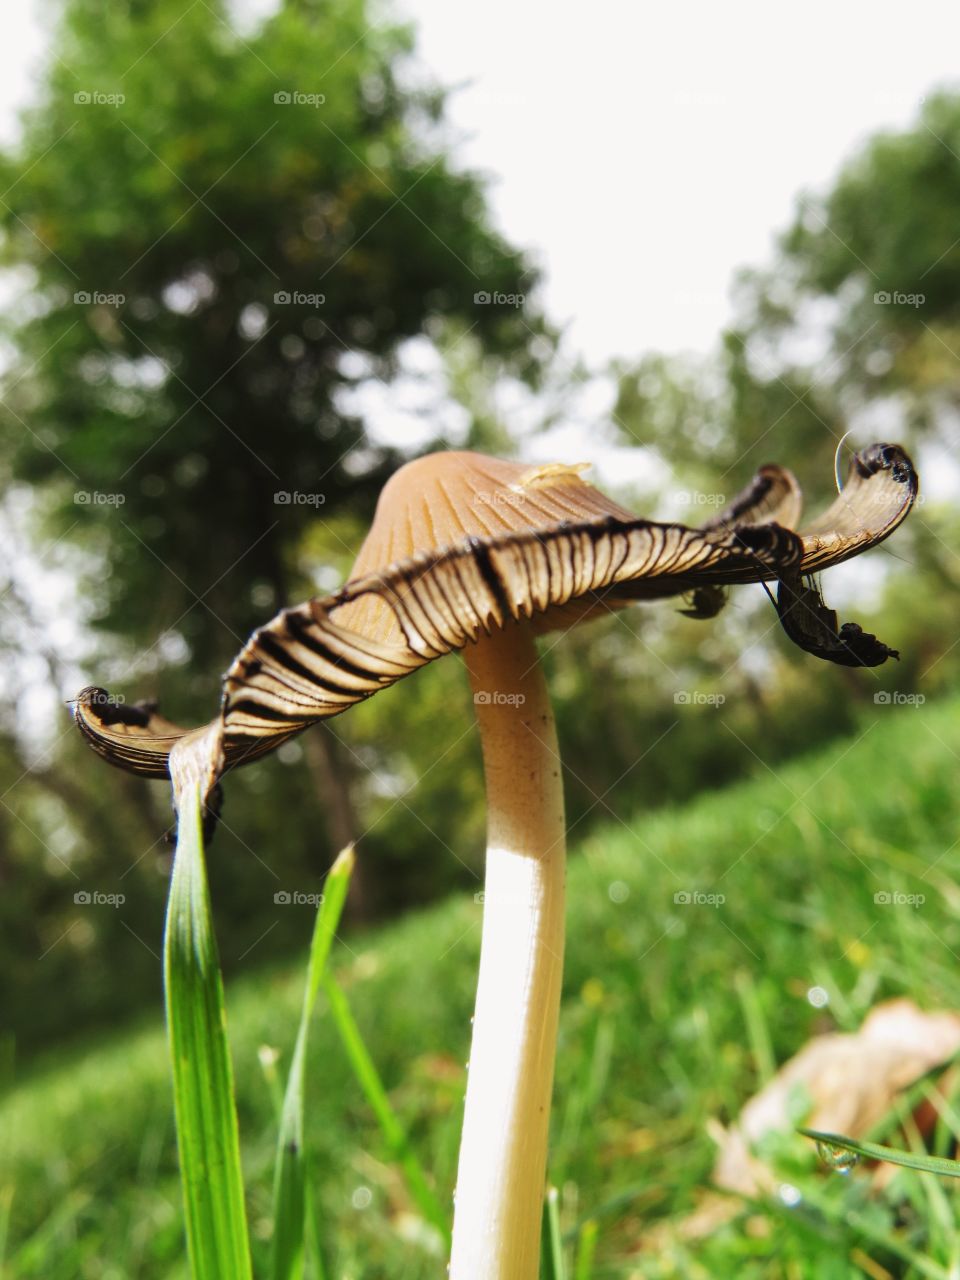 A gorgeous mushroom